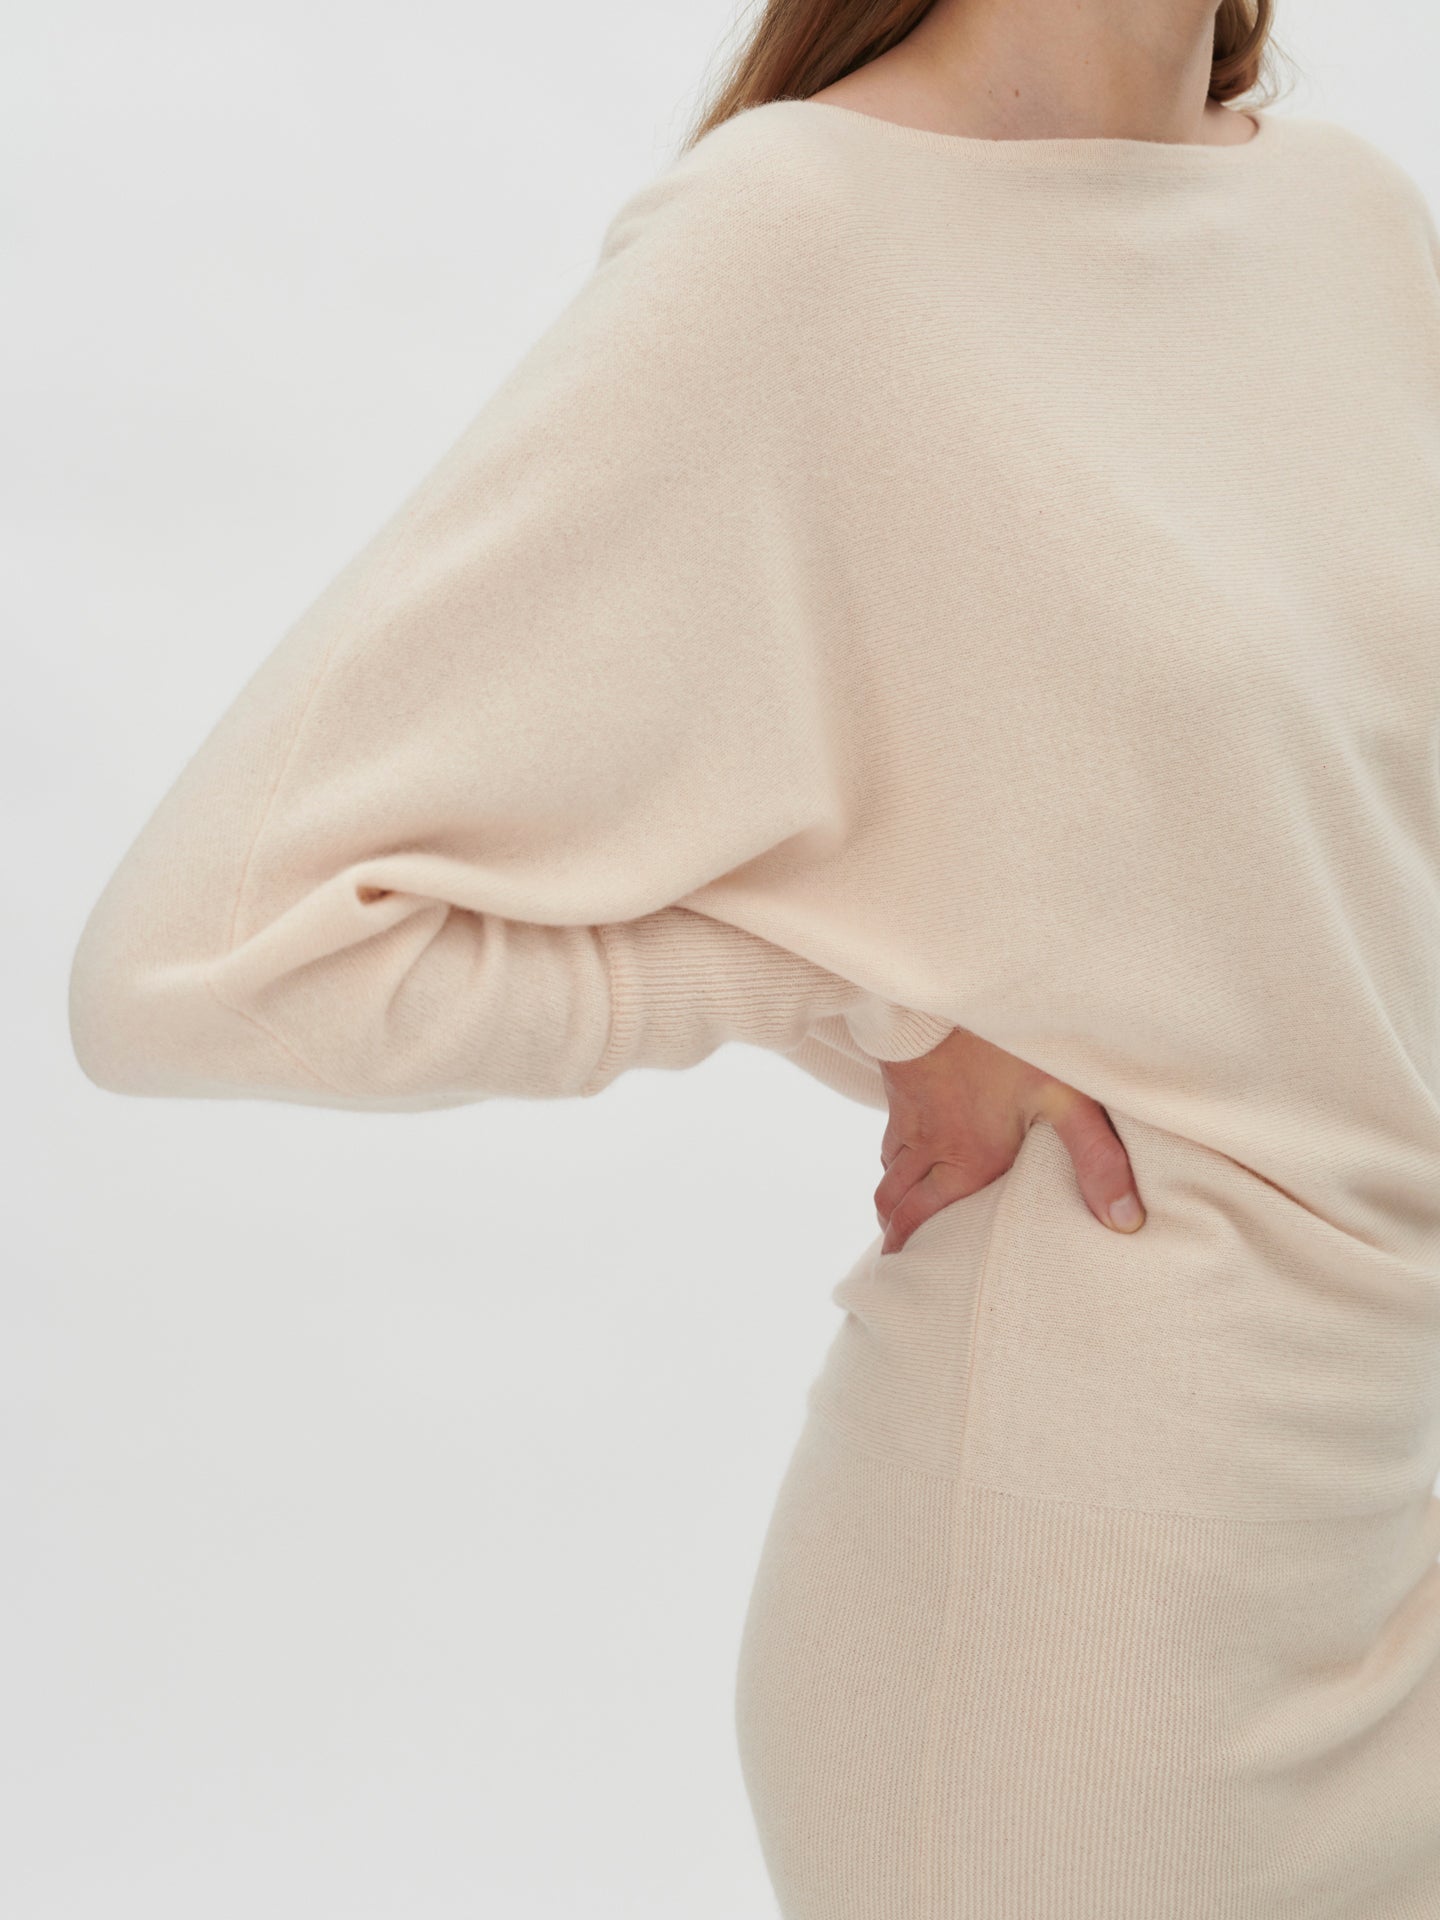 Women's Cashmere Long Sleeve Mini Knit Dress Crème Brulee - Gobi Cashmere